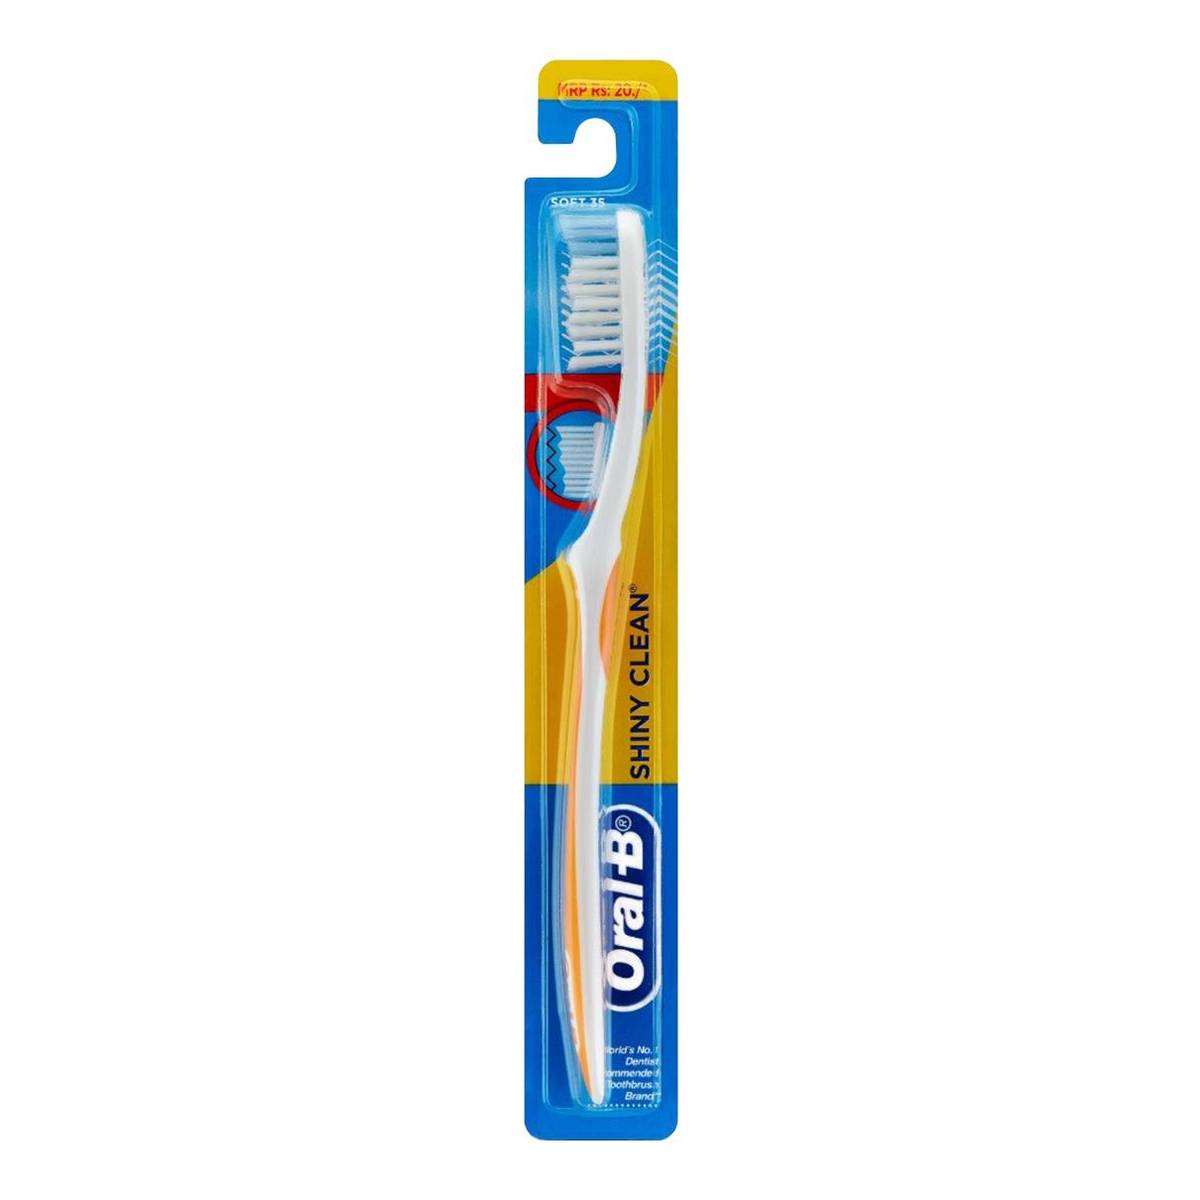 Oral-B Complete Clean Tooth Brush (Medium)